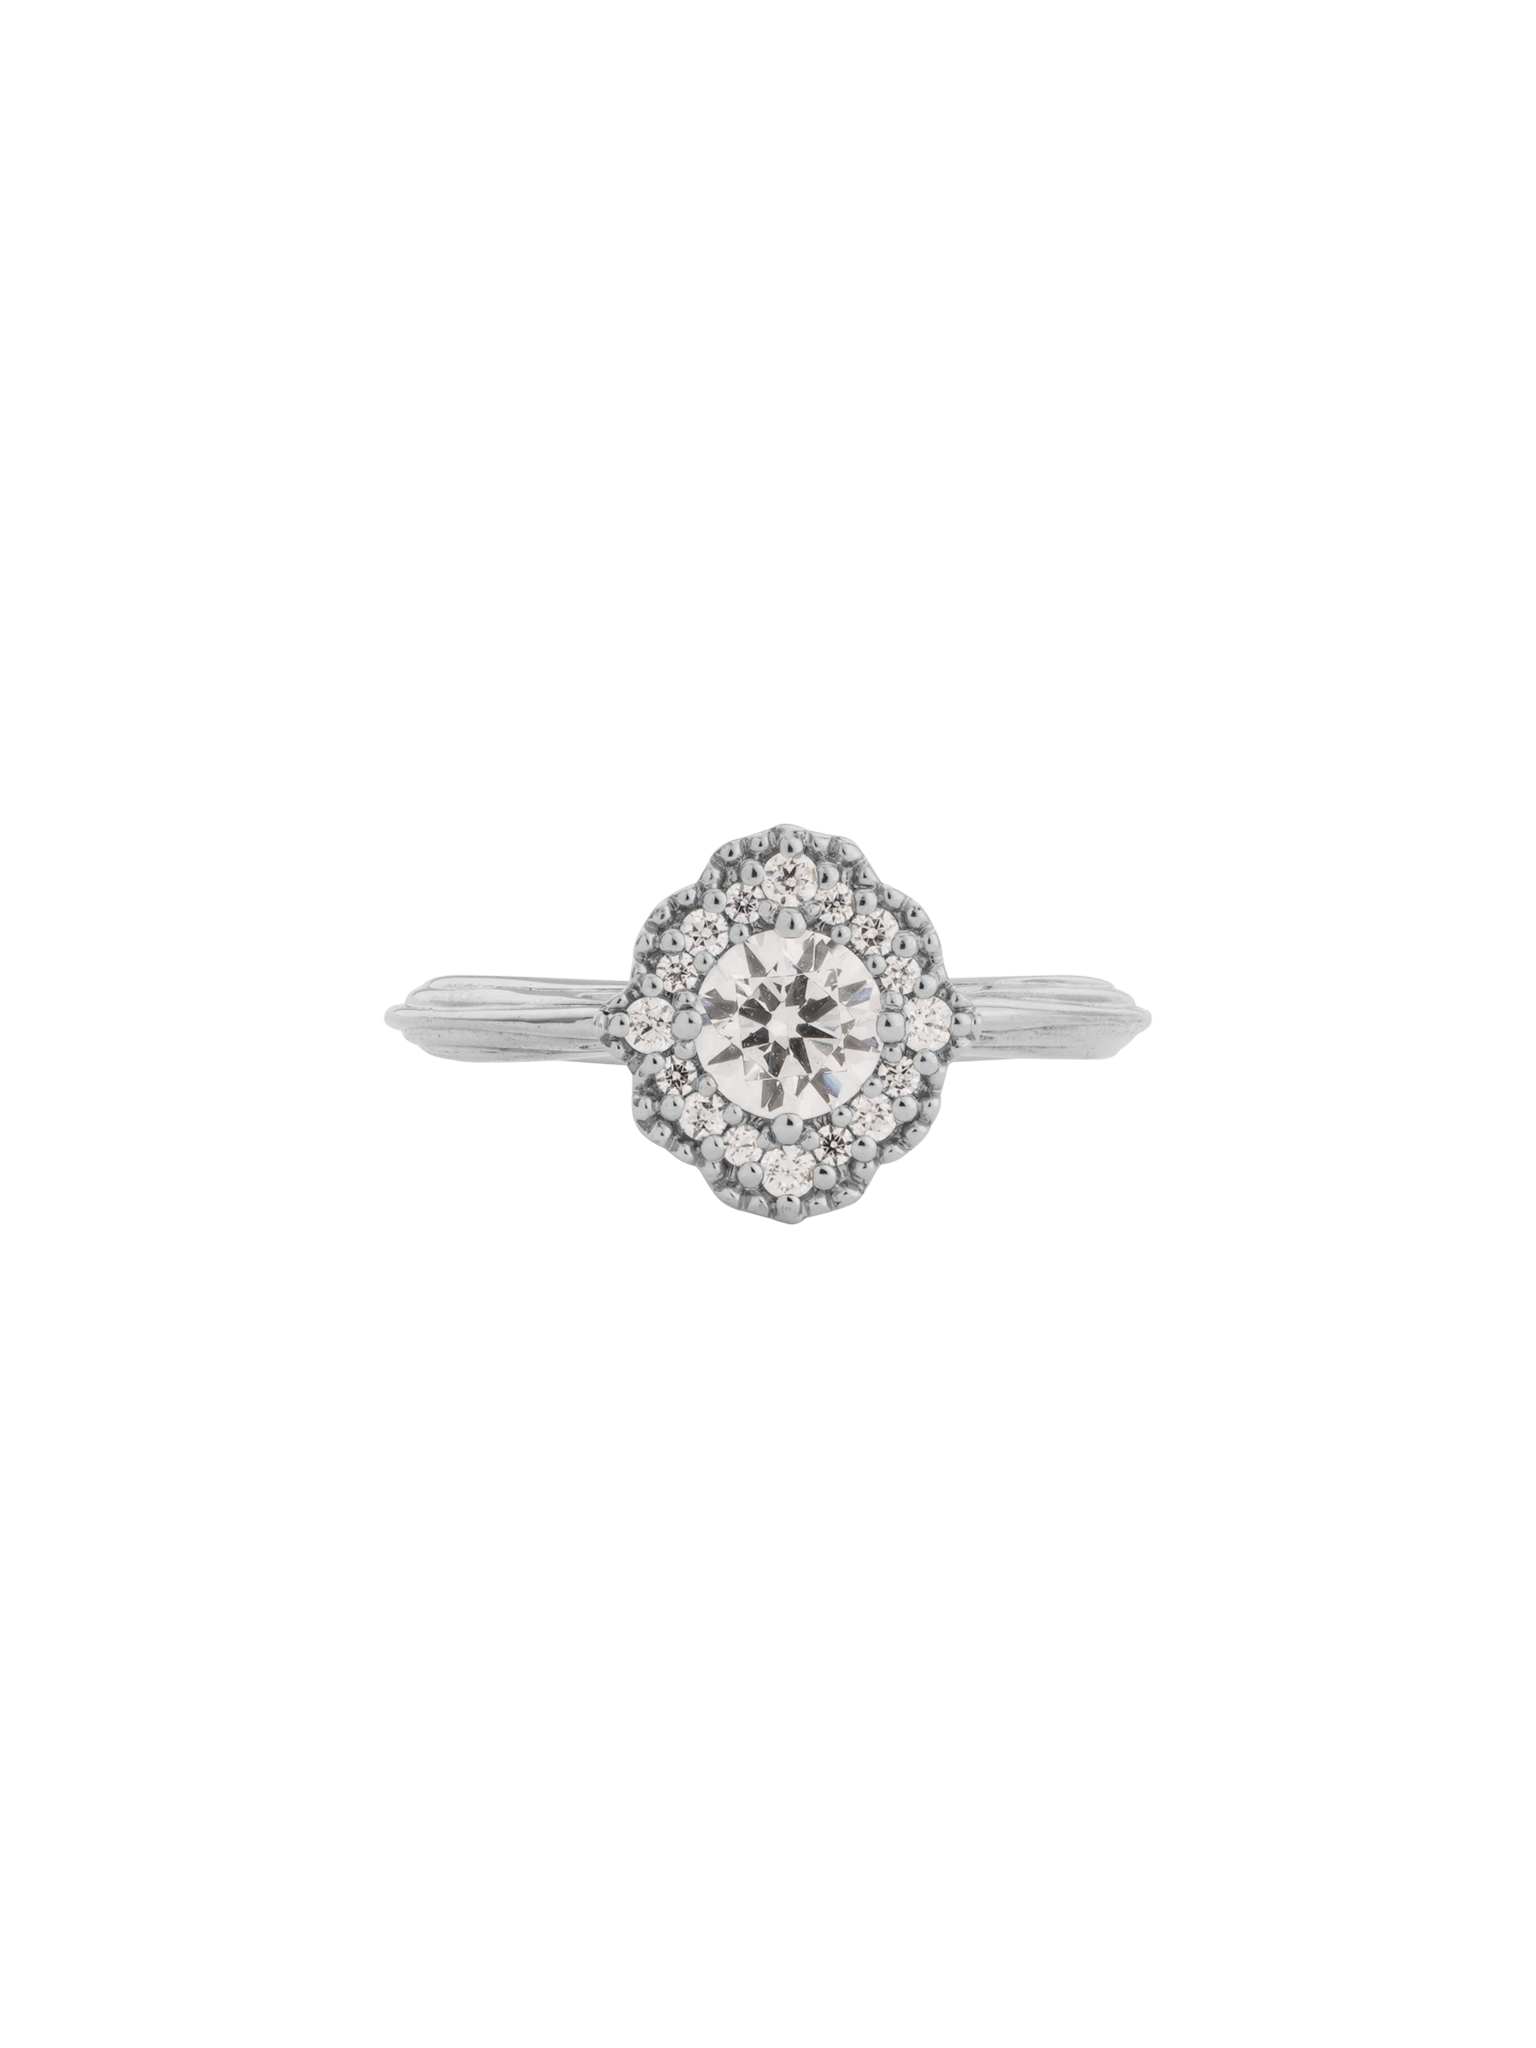 Organic enchanted rose halo engagement ring 